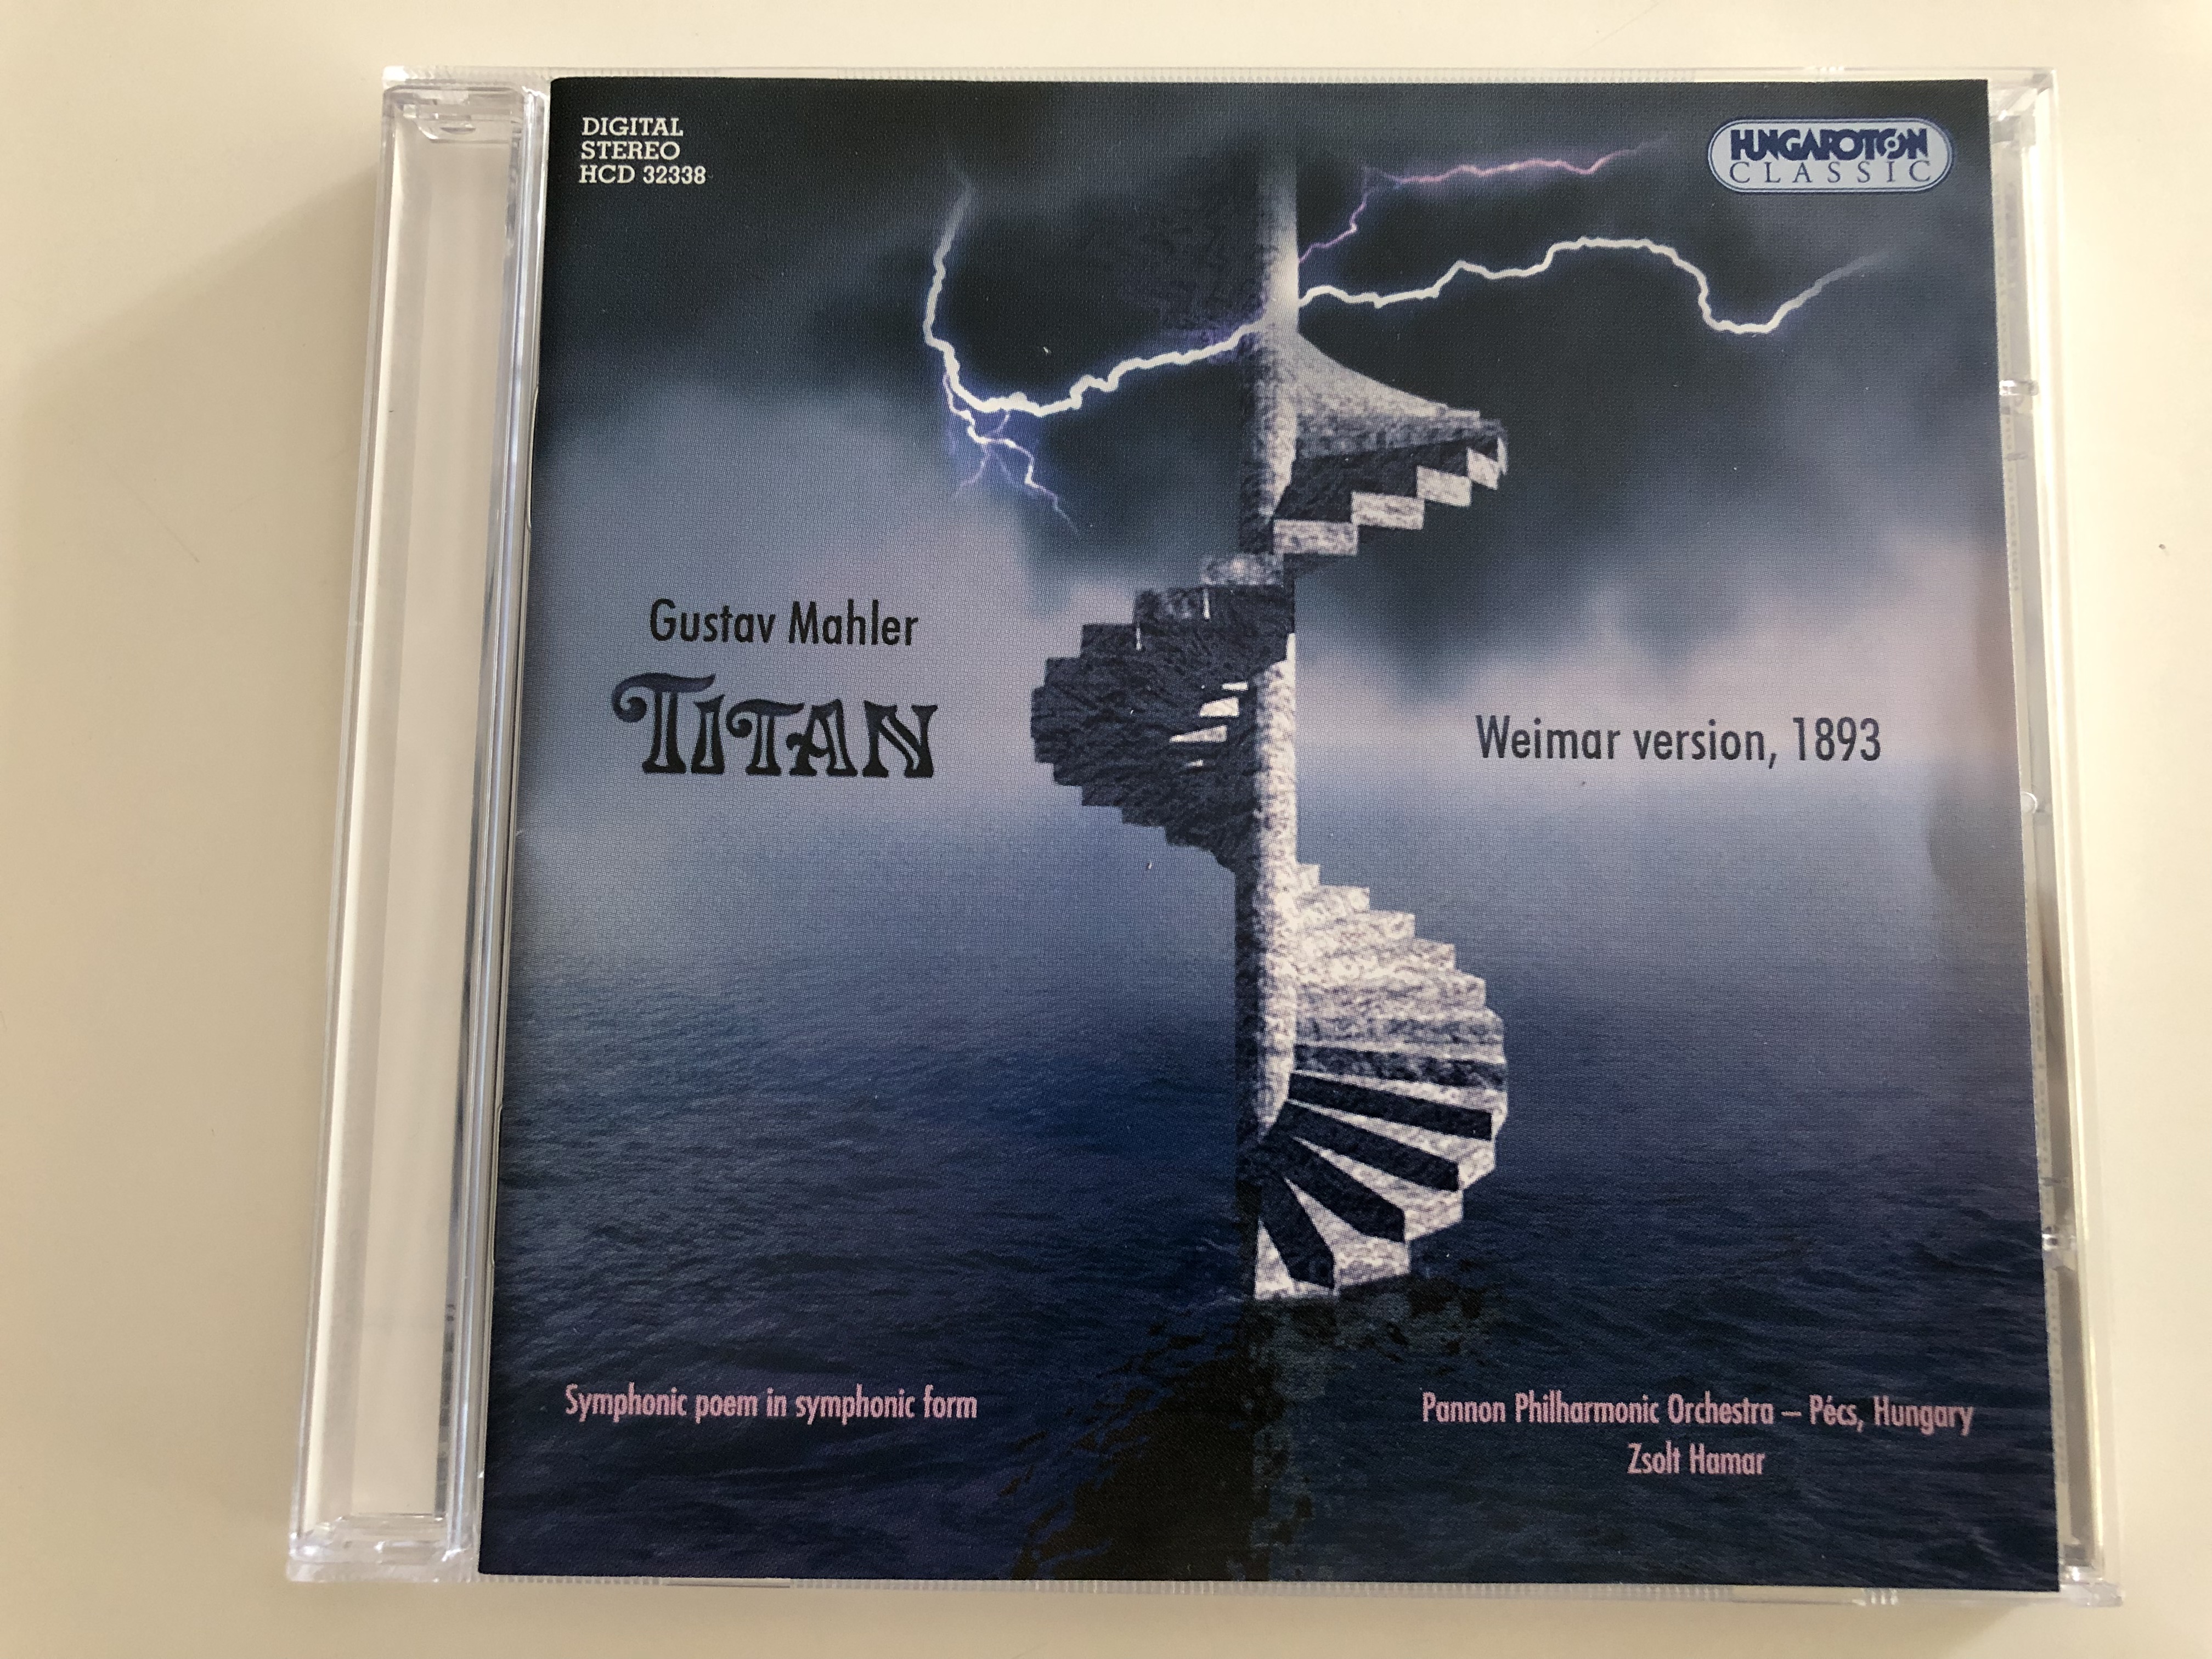 gustav-mahler-titan-weimar-version-1893-symphonic-poem-in-symphonic-form-pannon-philharmonic-orchestra-p-cs-hungary-conducted-by-zsolt-hamar-hungaroton-classic-audio-cd-2005-hcd-32338-1-.jpg